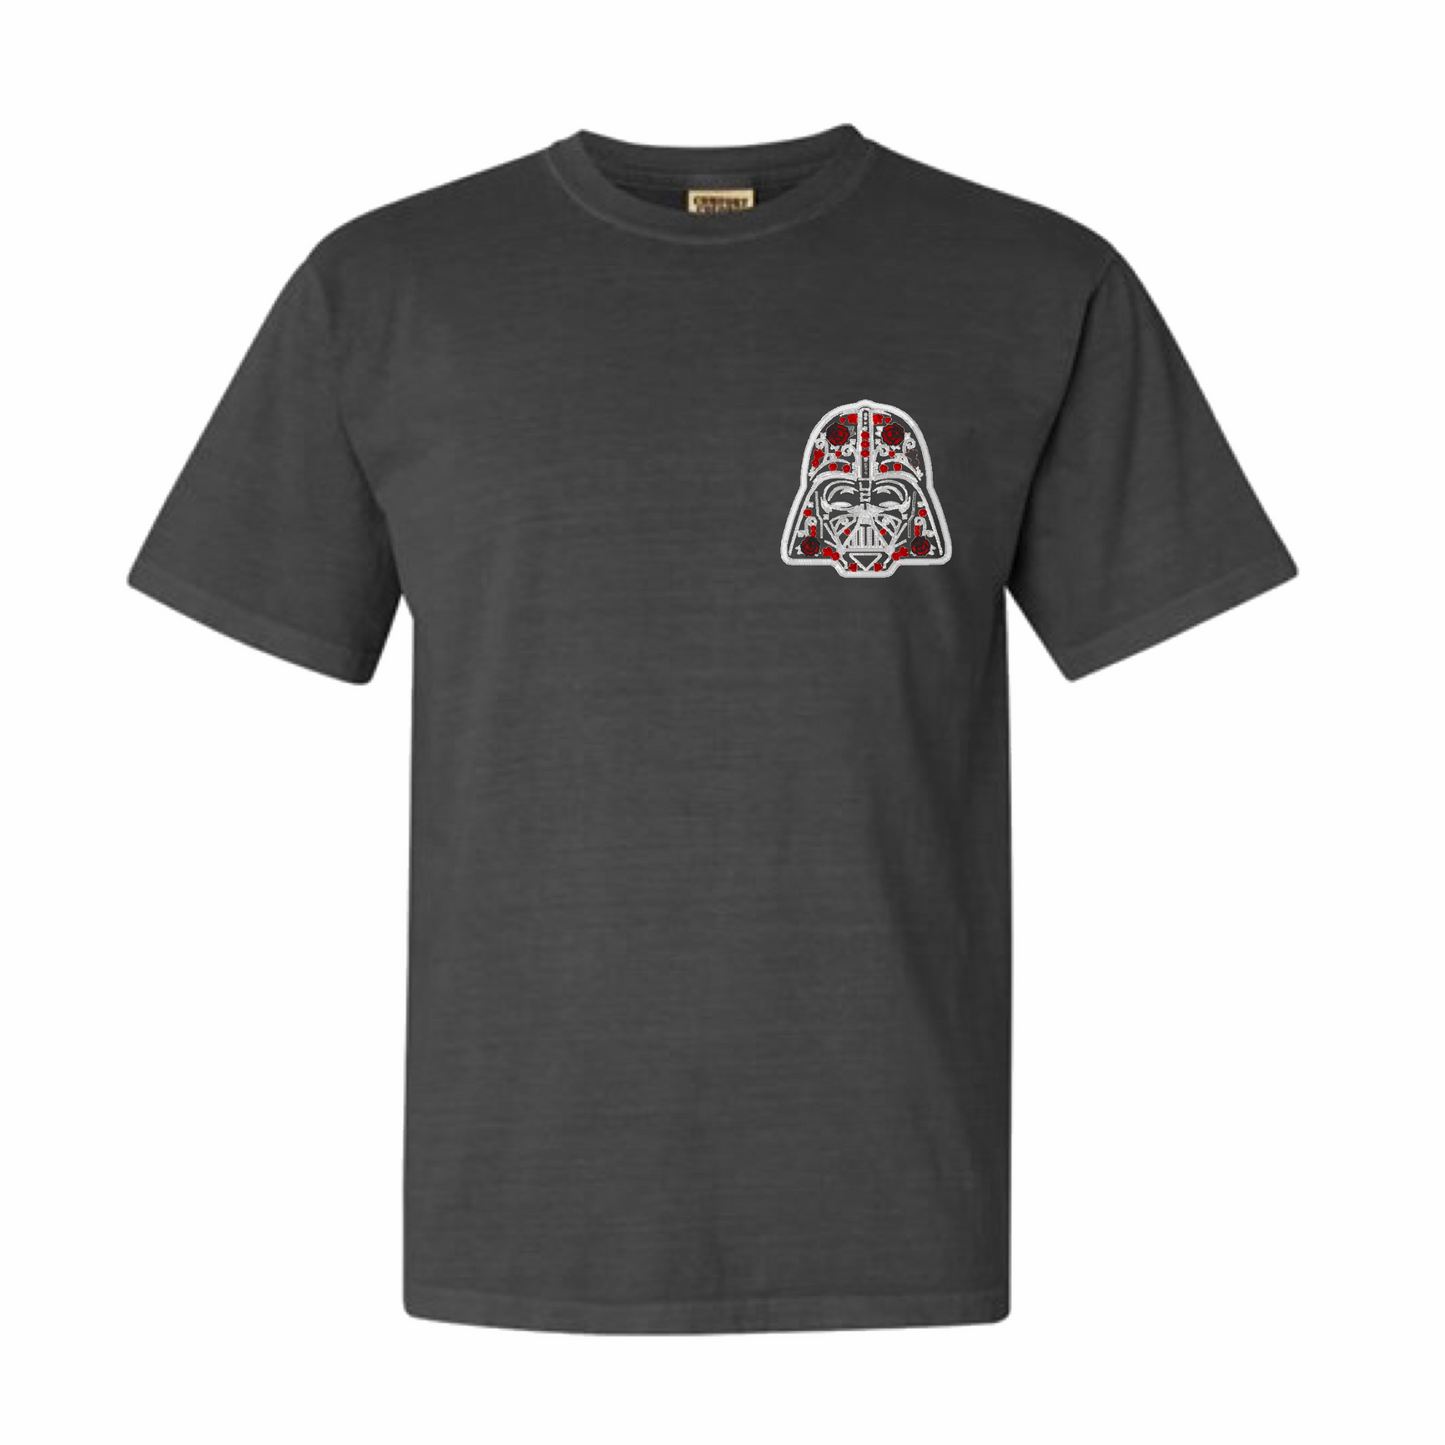 Darth Vader Embroidered T-shirt